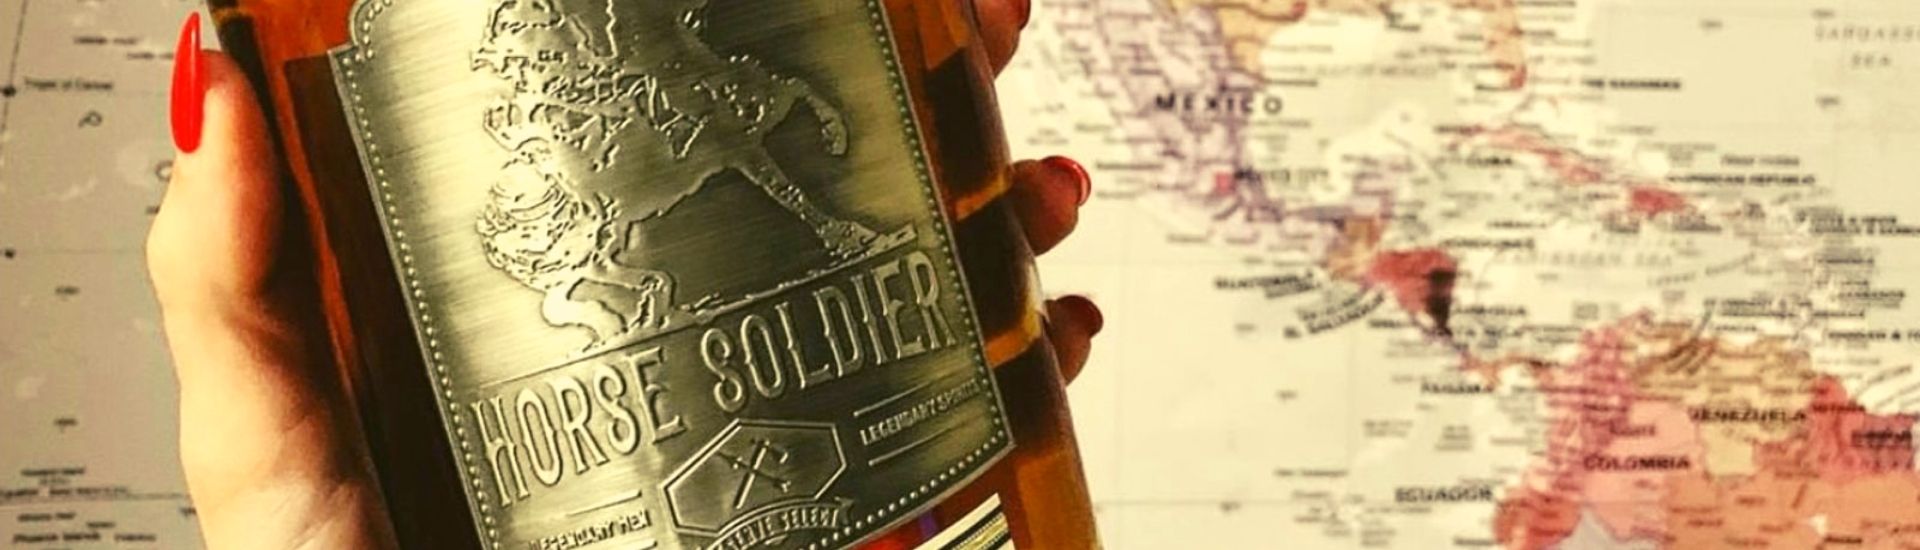 horse soldier bourbon bottle on hand